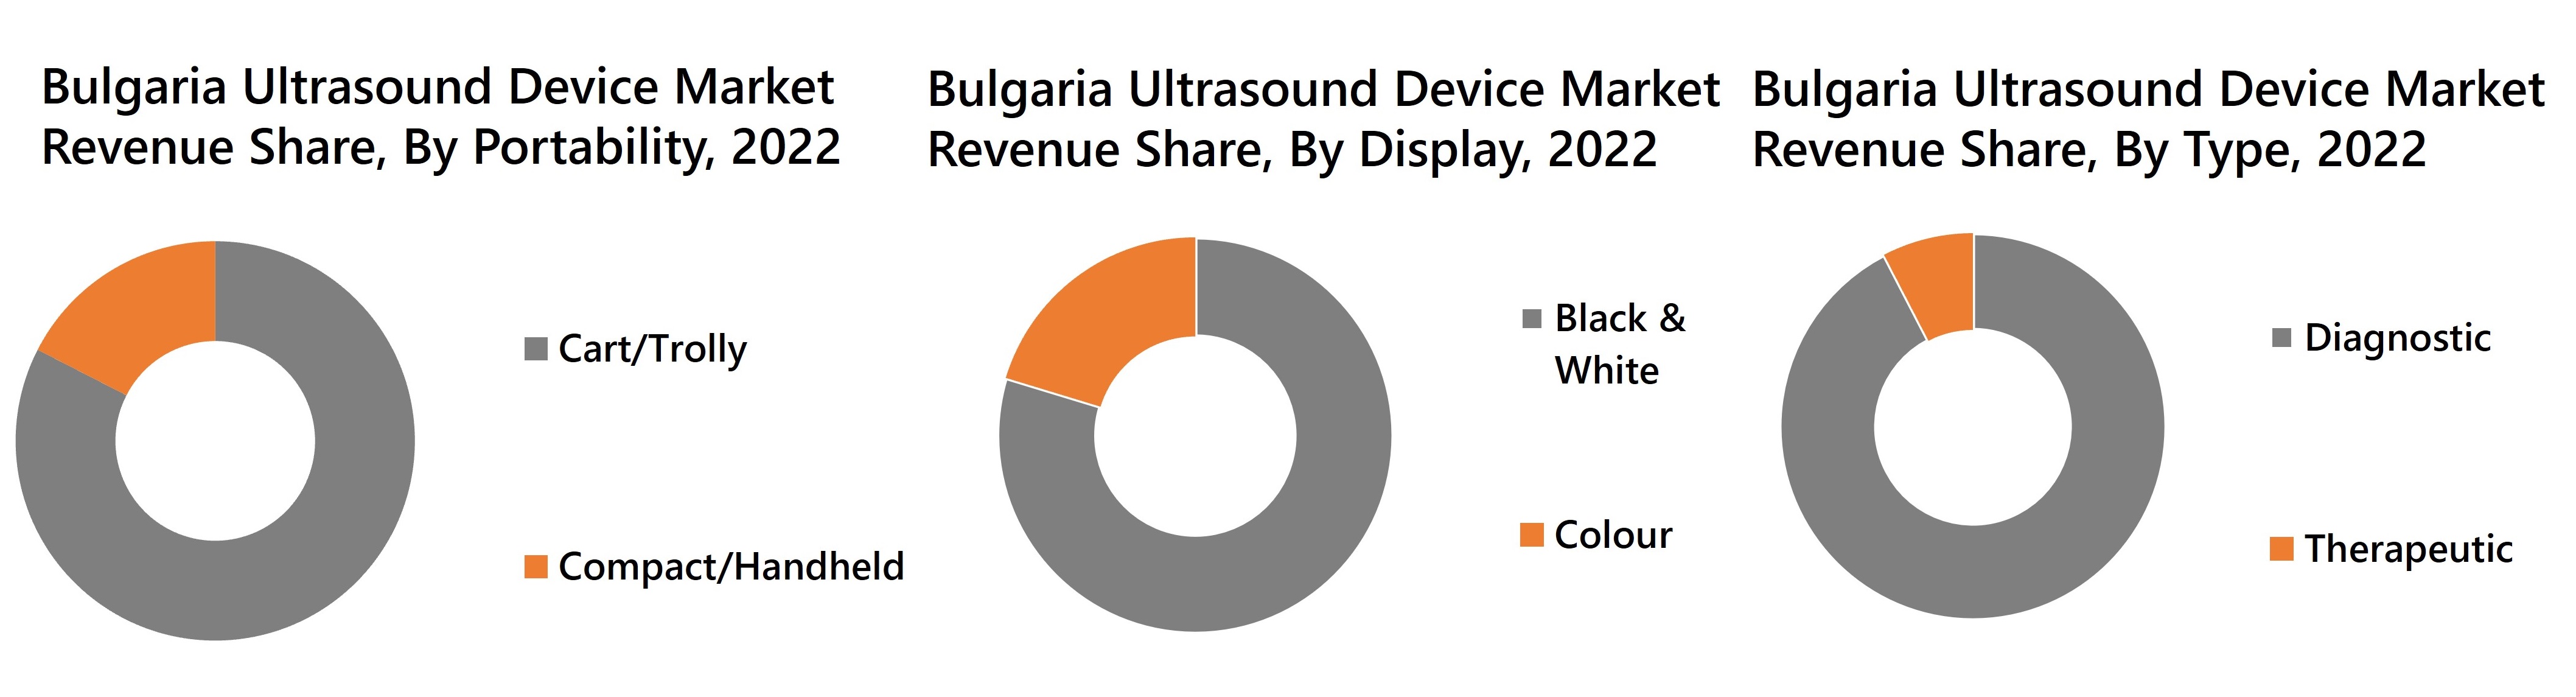 Bulgaria Ultrasound Device Market Revenue Share